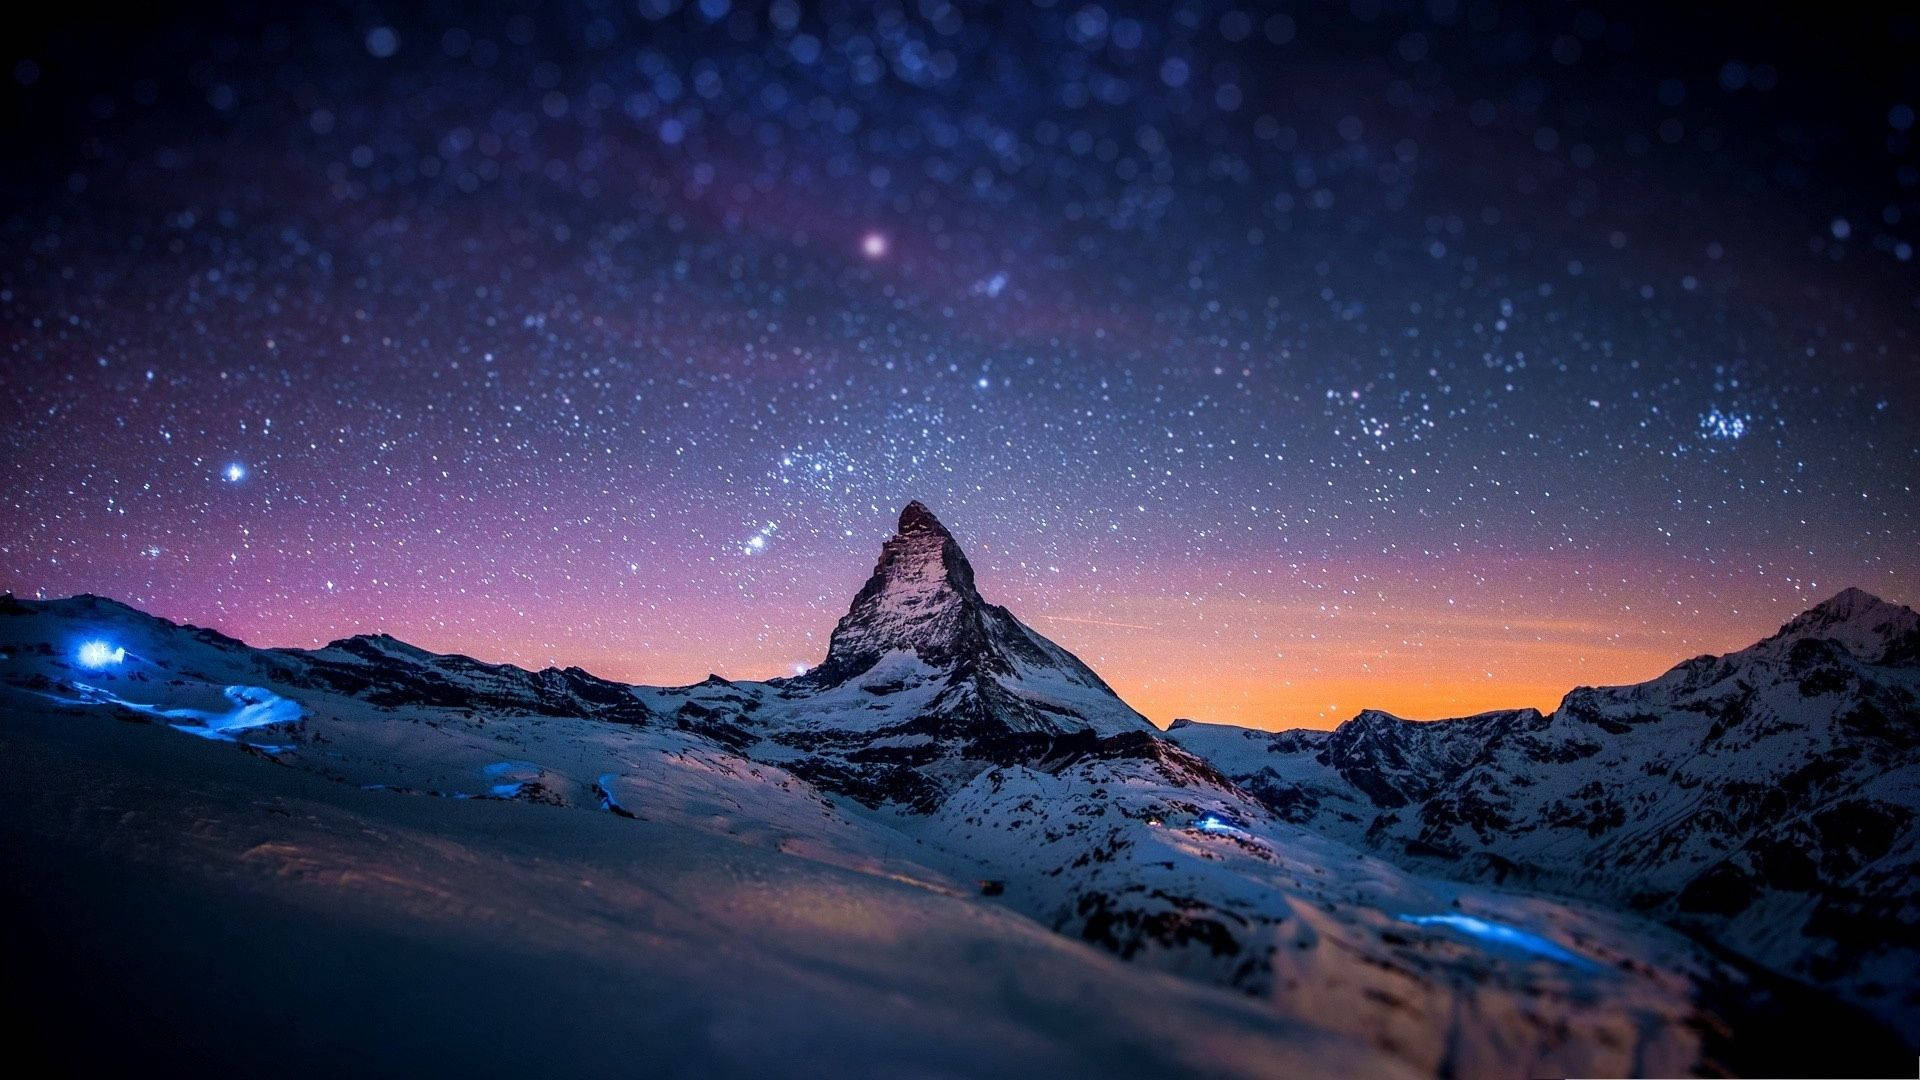 Beautiful Hd Mountain And Night Sky